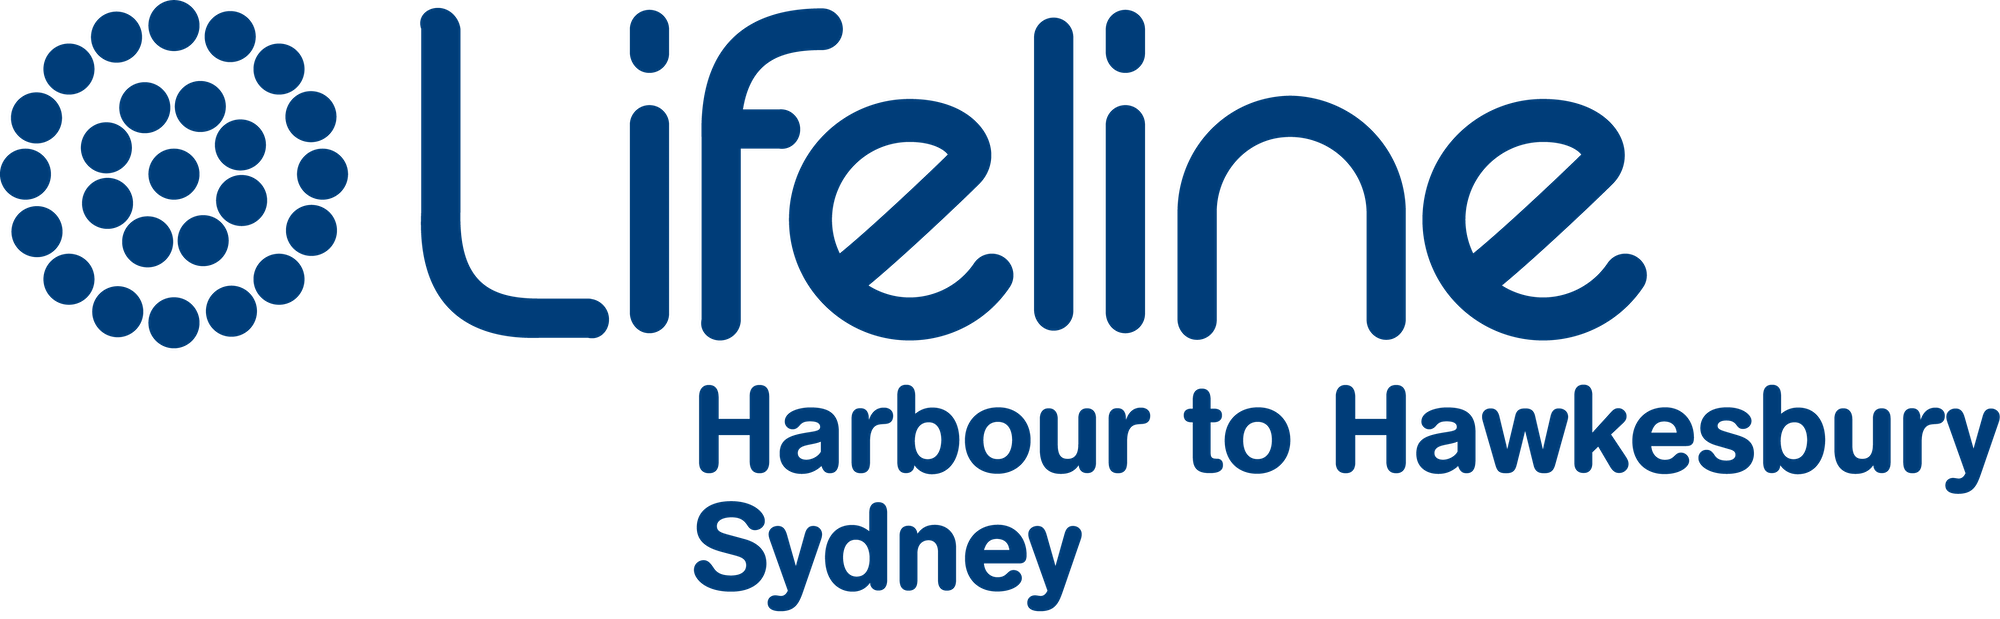 Lifeline Harbour to Hawkesbury Sydney logo